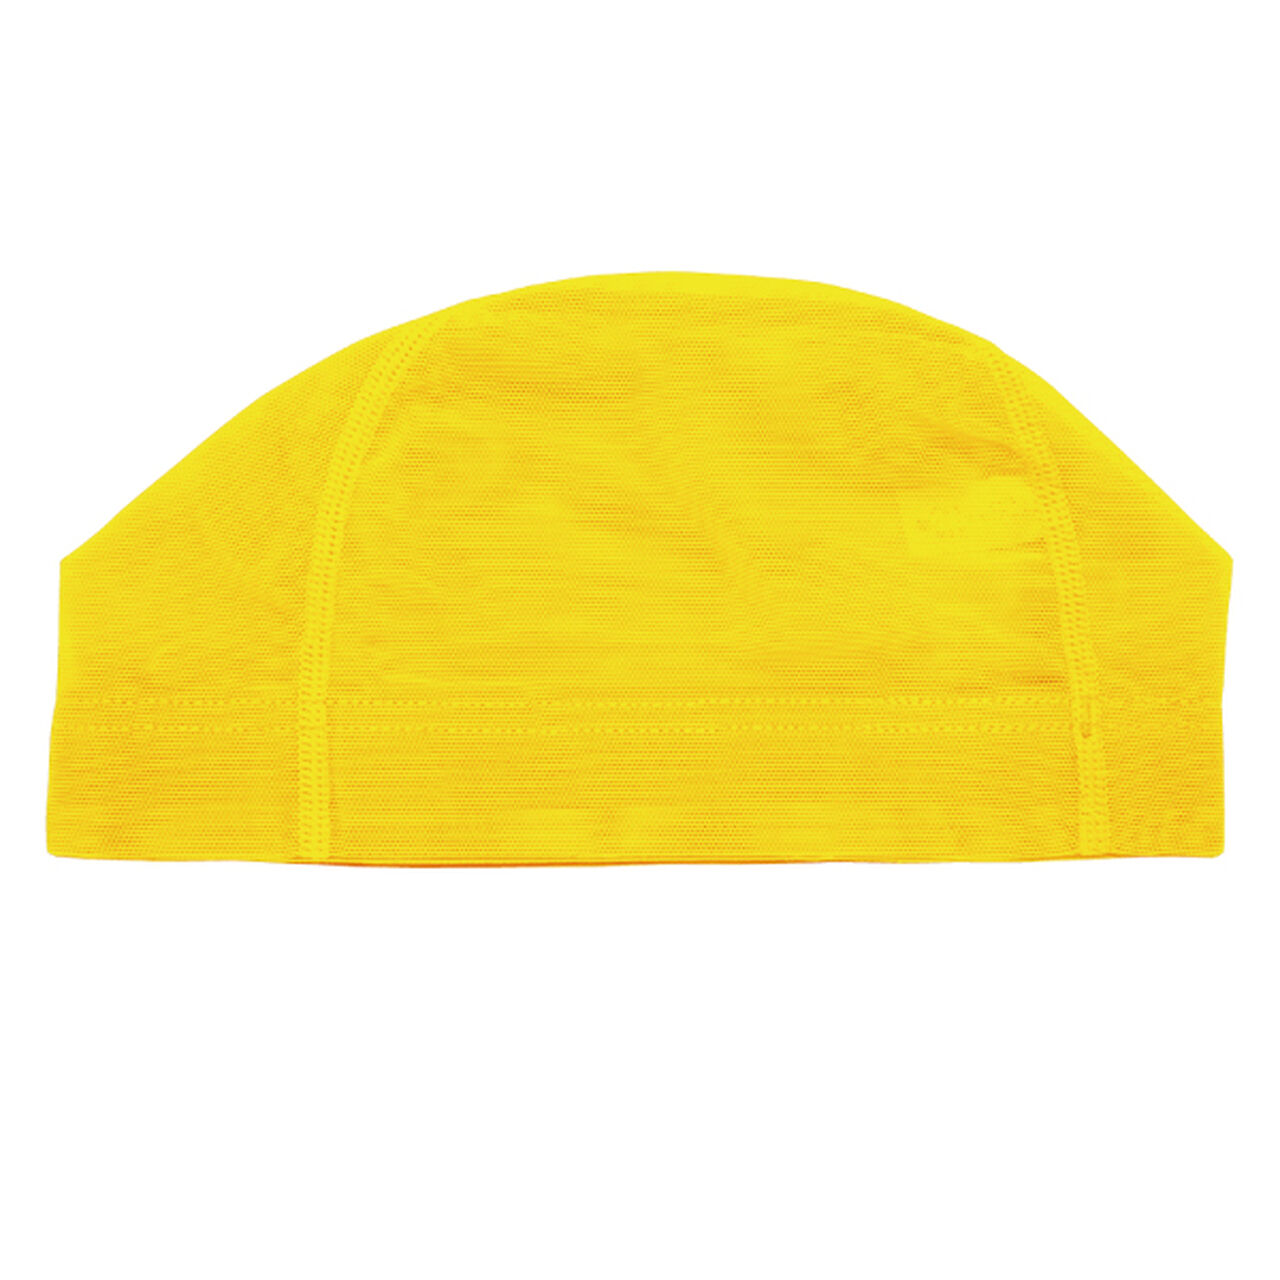 SA-61 M Yellow mesh swim cap M size,Opt5, large image number 0